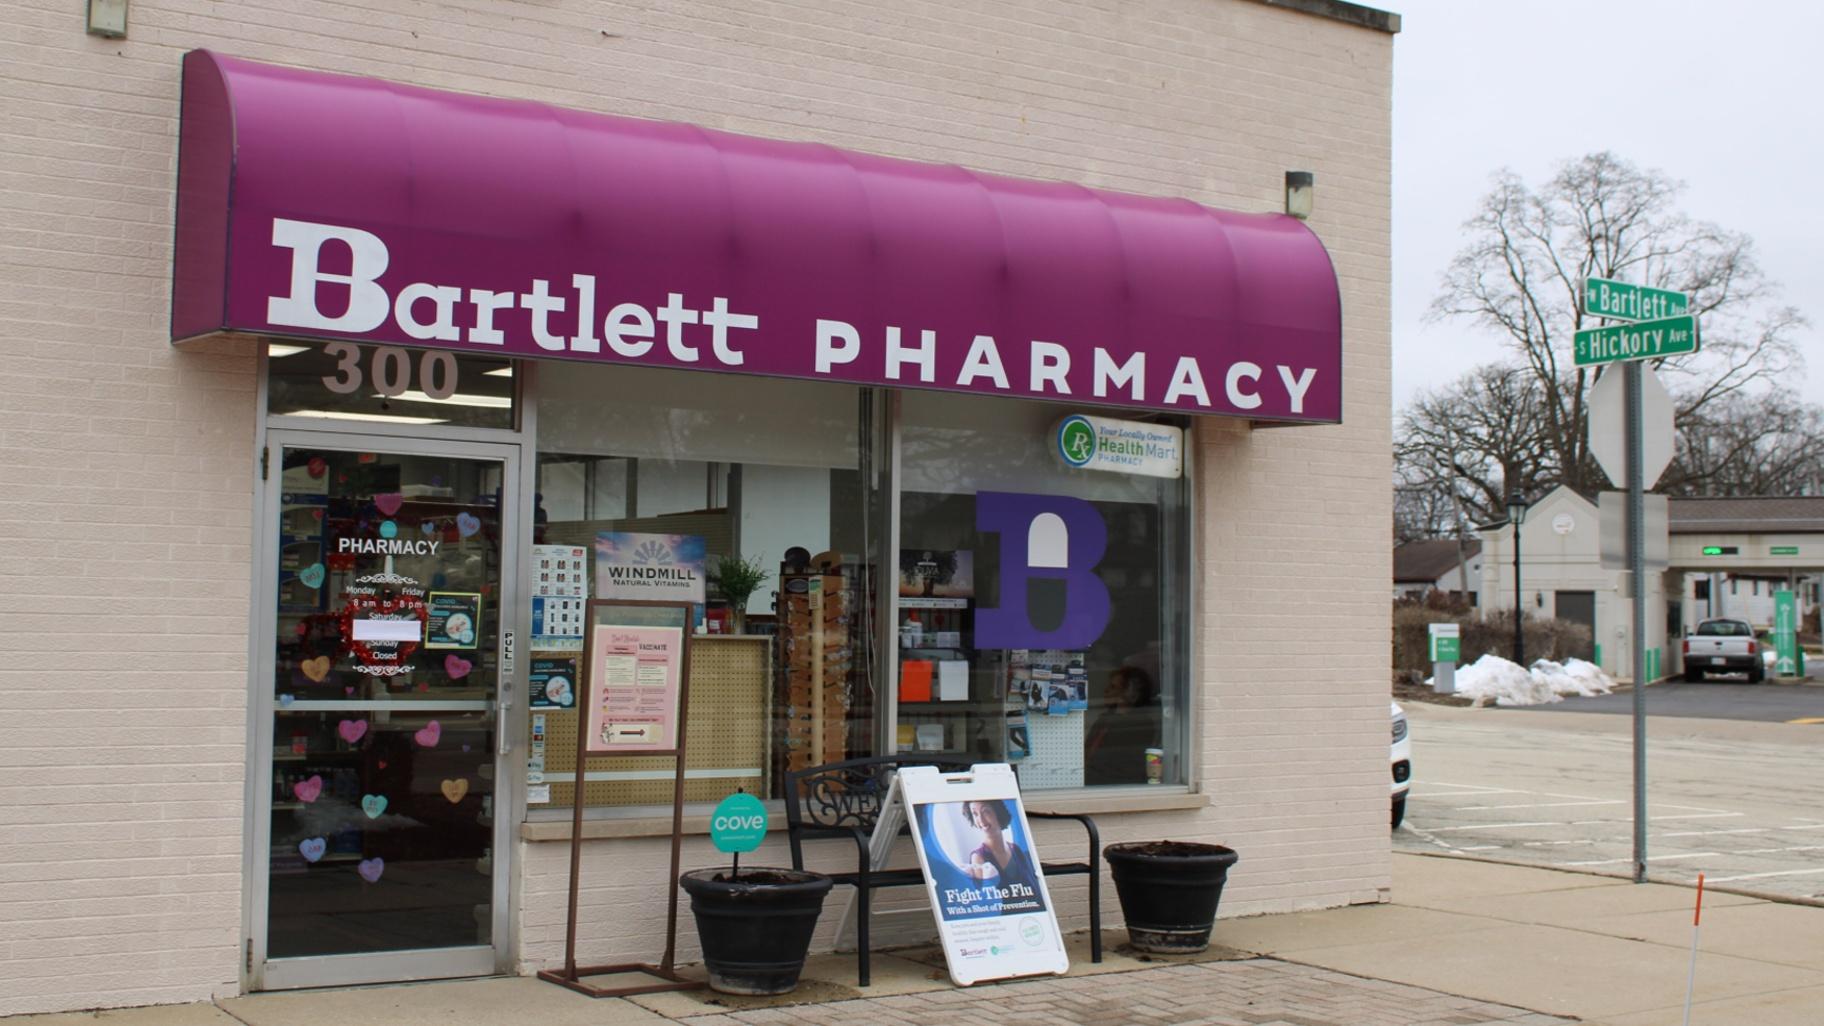 Bartlett Pharmacy in Bartlett, Illinois. (DePaul’s Center for Journalism Integrity and Excellence)